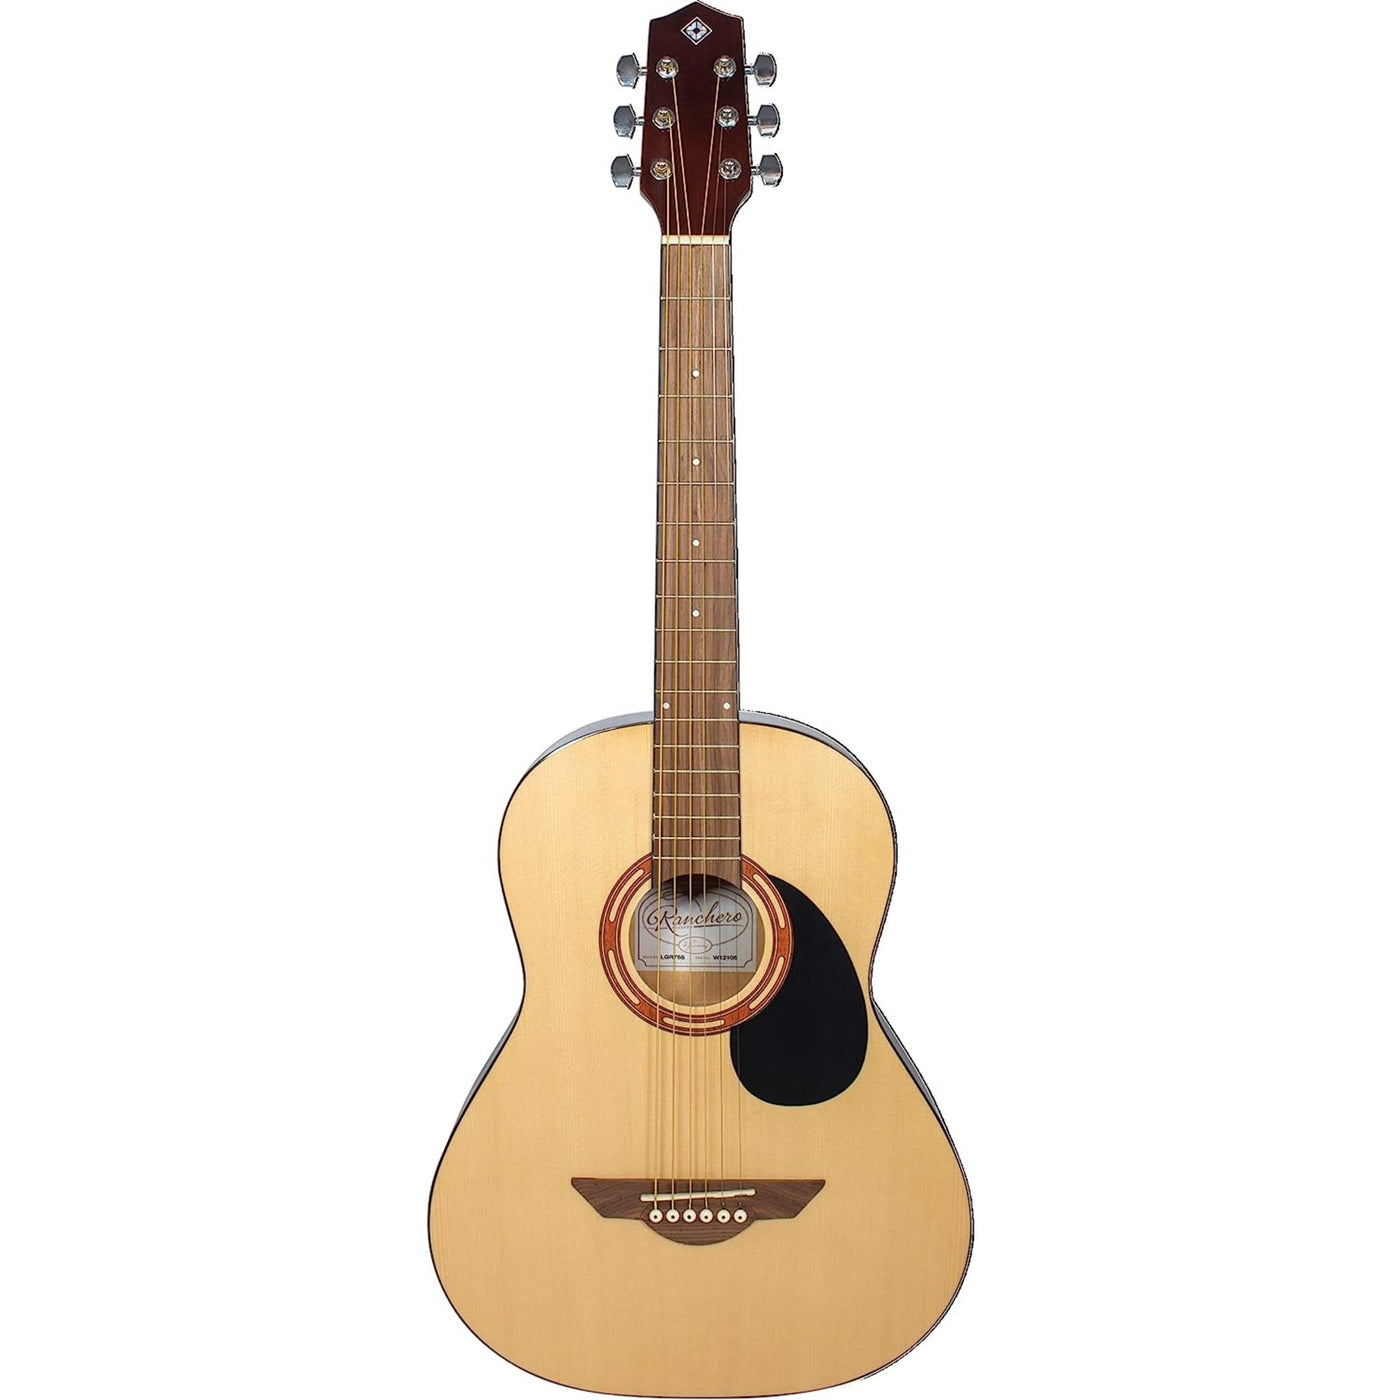 H. Jimenez LGR75S 3/4 Size Steel String Guitar, Ranchero Series with Gig Bag